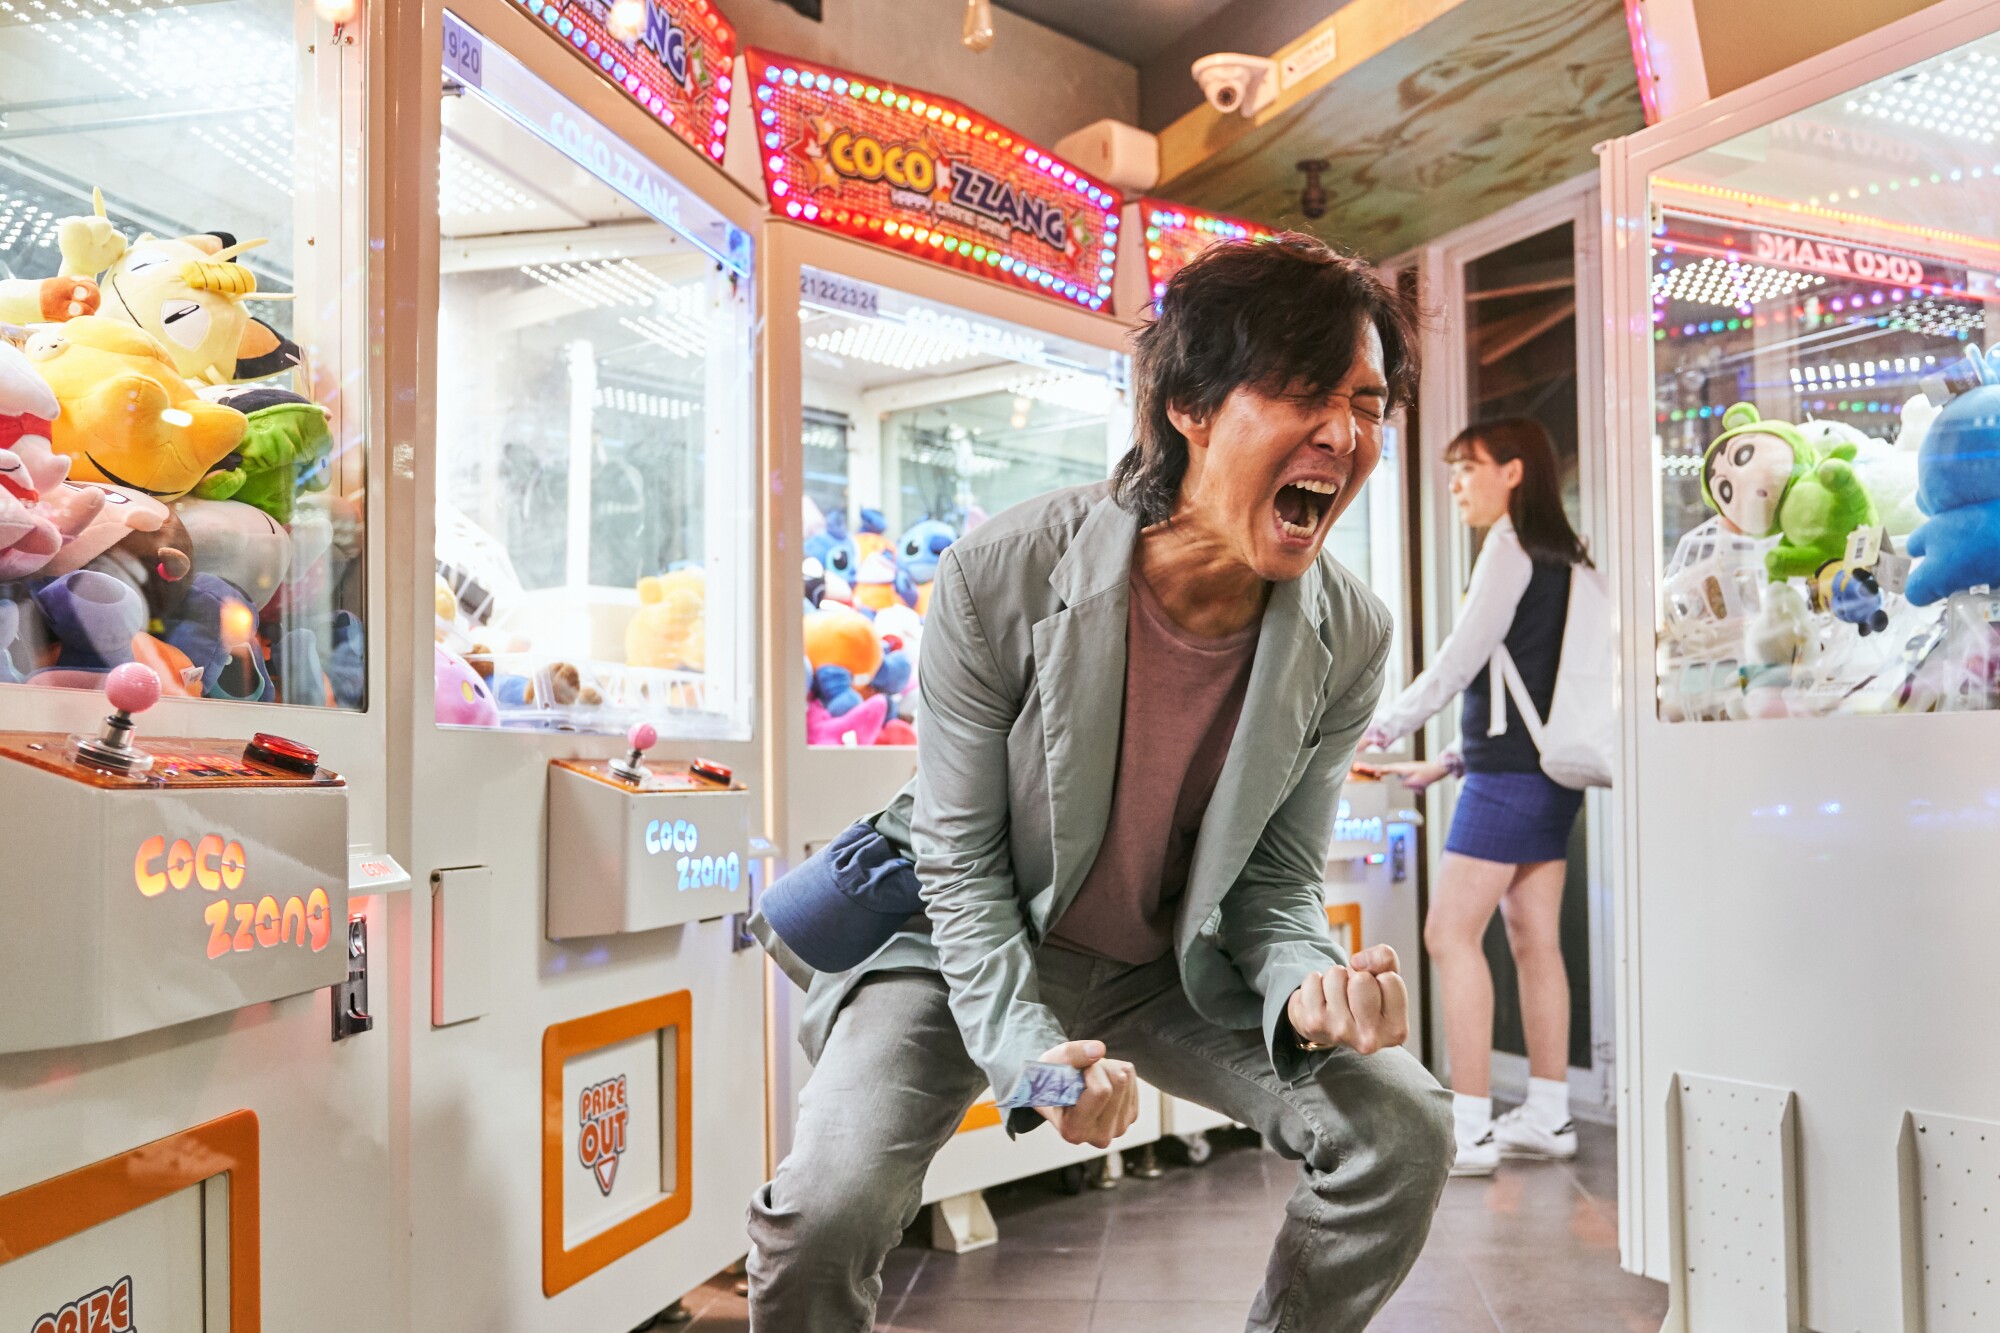 A man screams in desperation at an arcade in Korea.